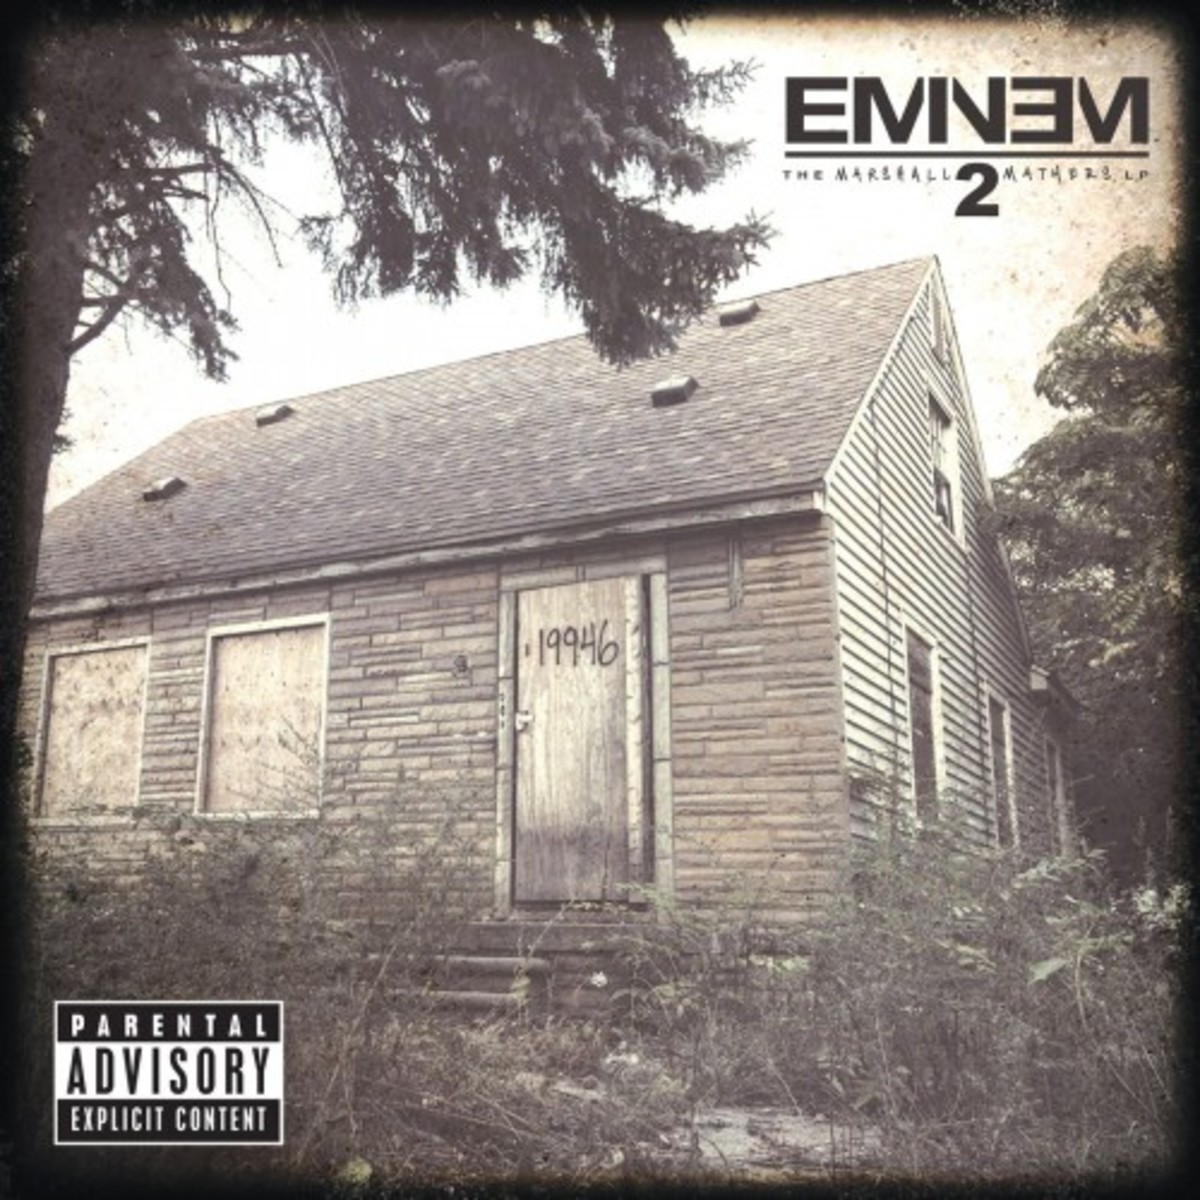 Eminem - "The Marshall Mathers LP 2"